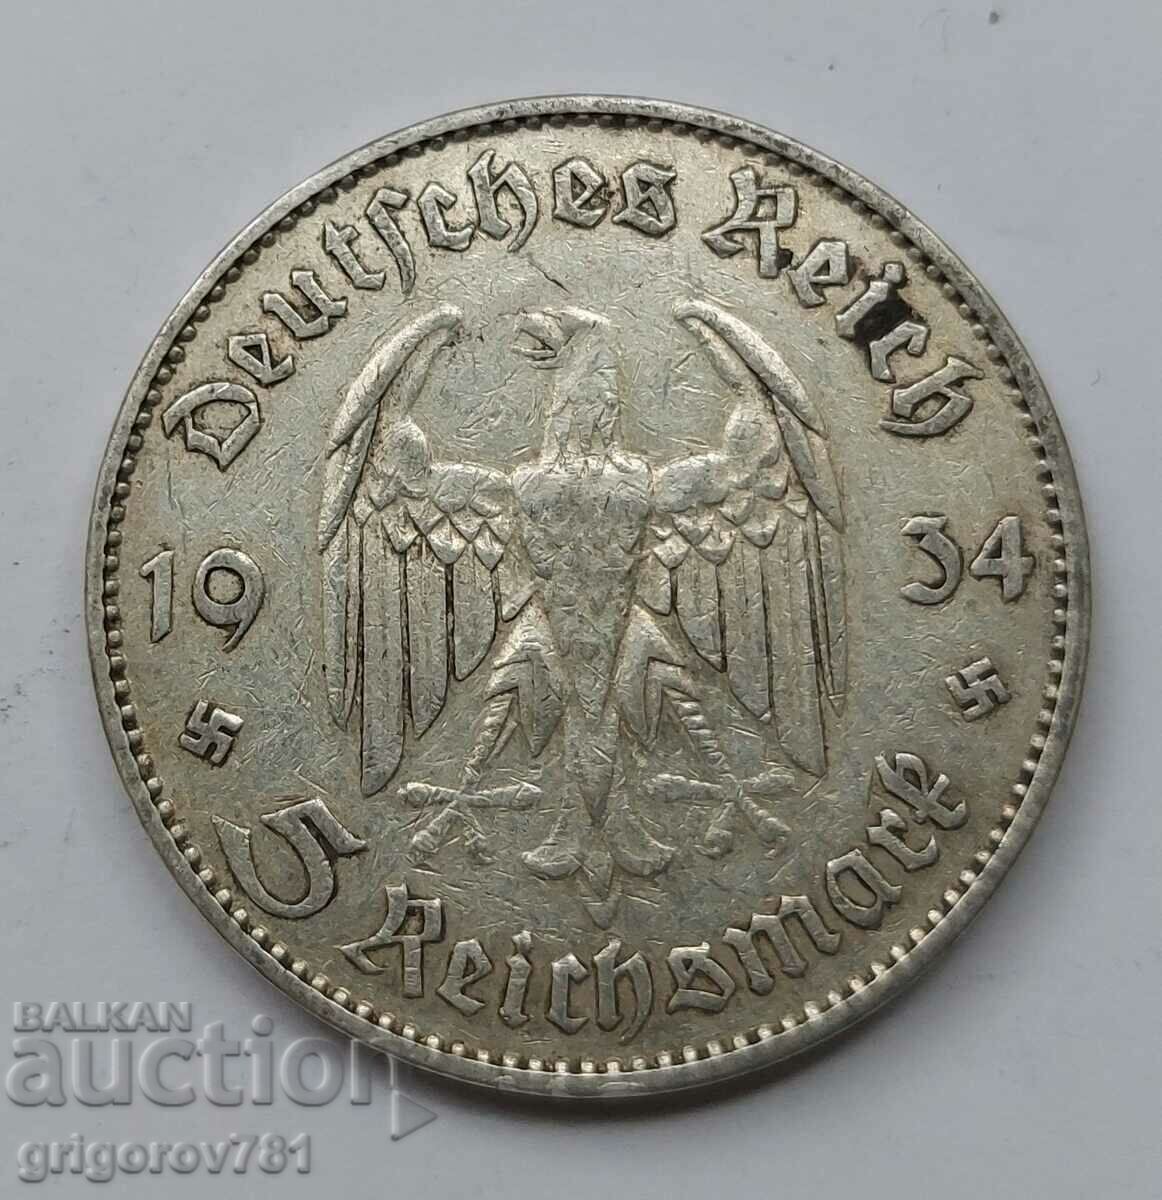 5 Mark Silver Γερμανία 1934 J III Reich Ασημένιο νόμισμα #80